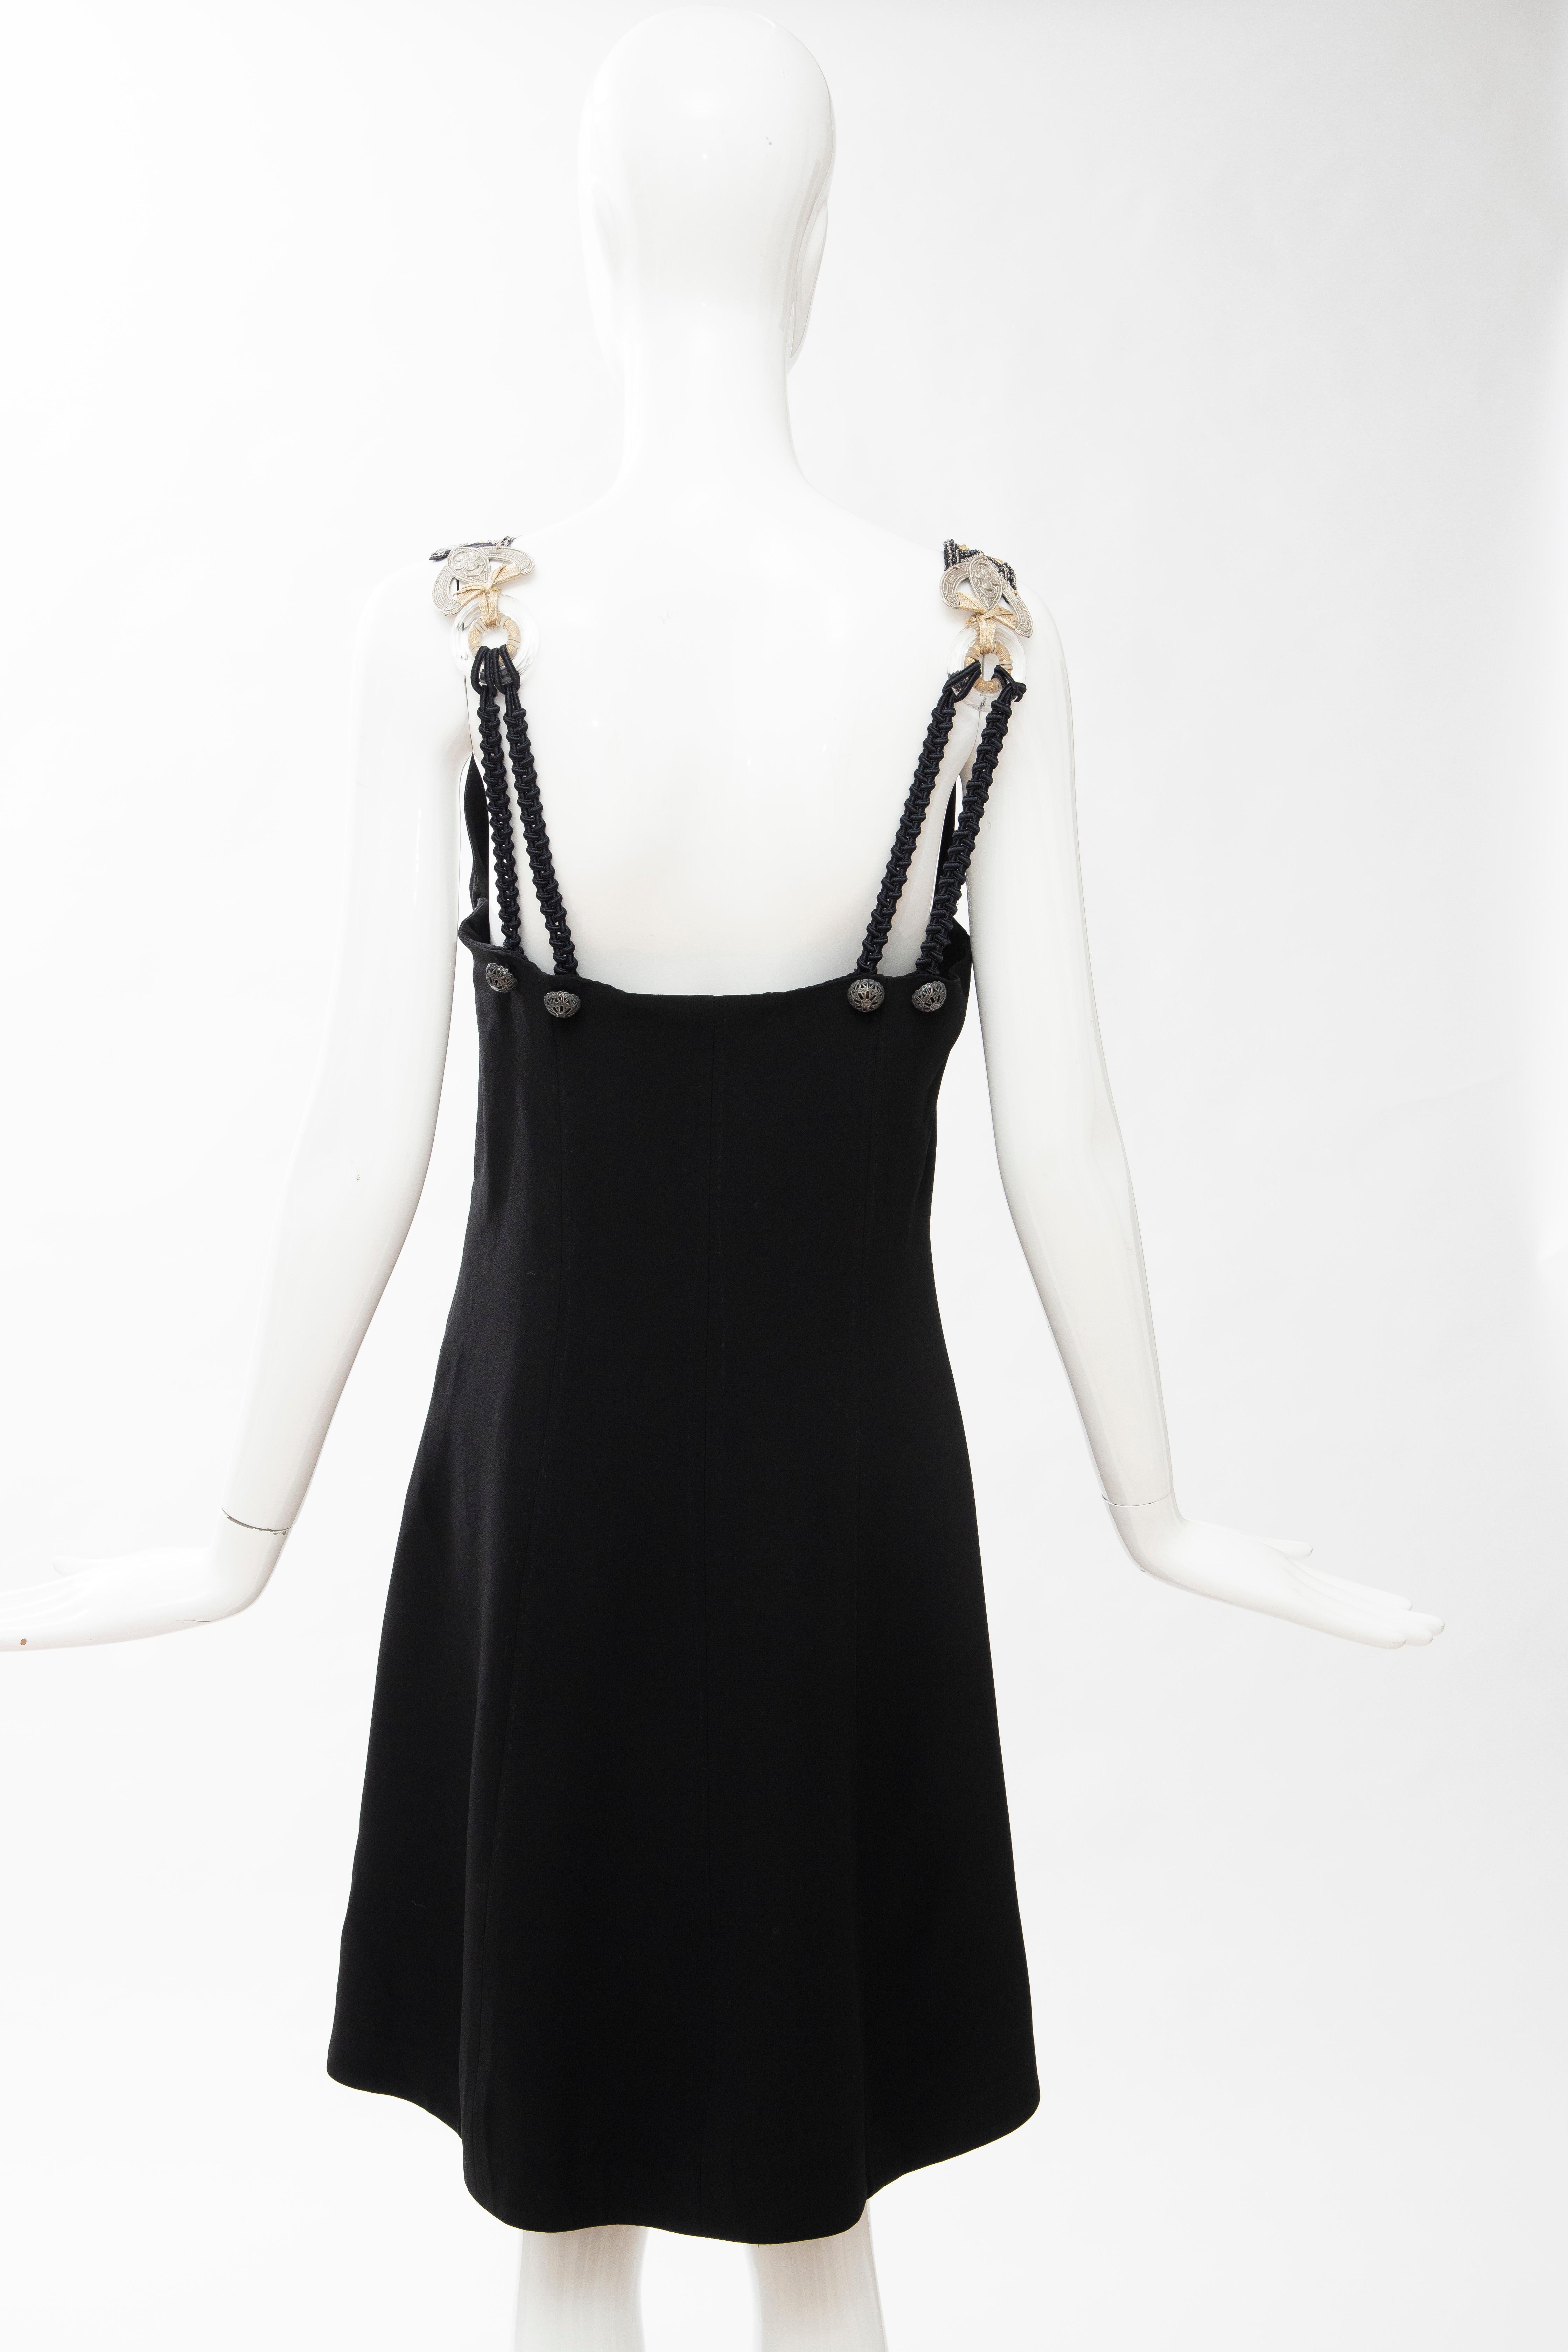 Christian Dior Gianfranco Ferré Numbered Black Embroidered Dress Ensemble, 1991 4